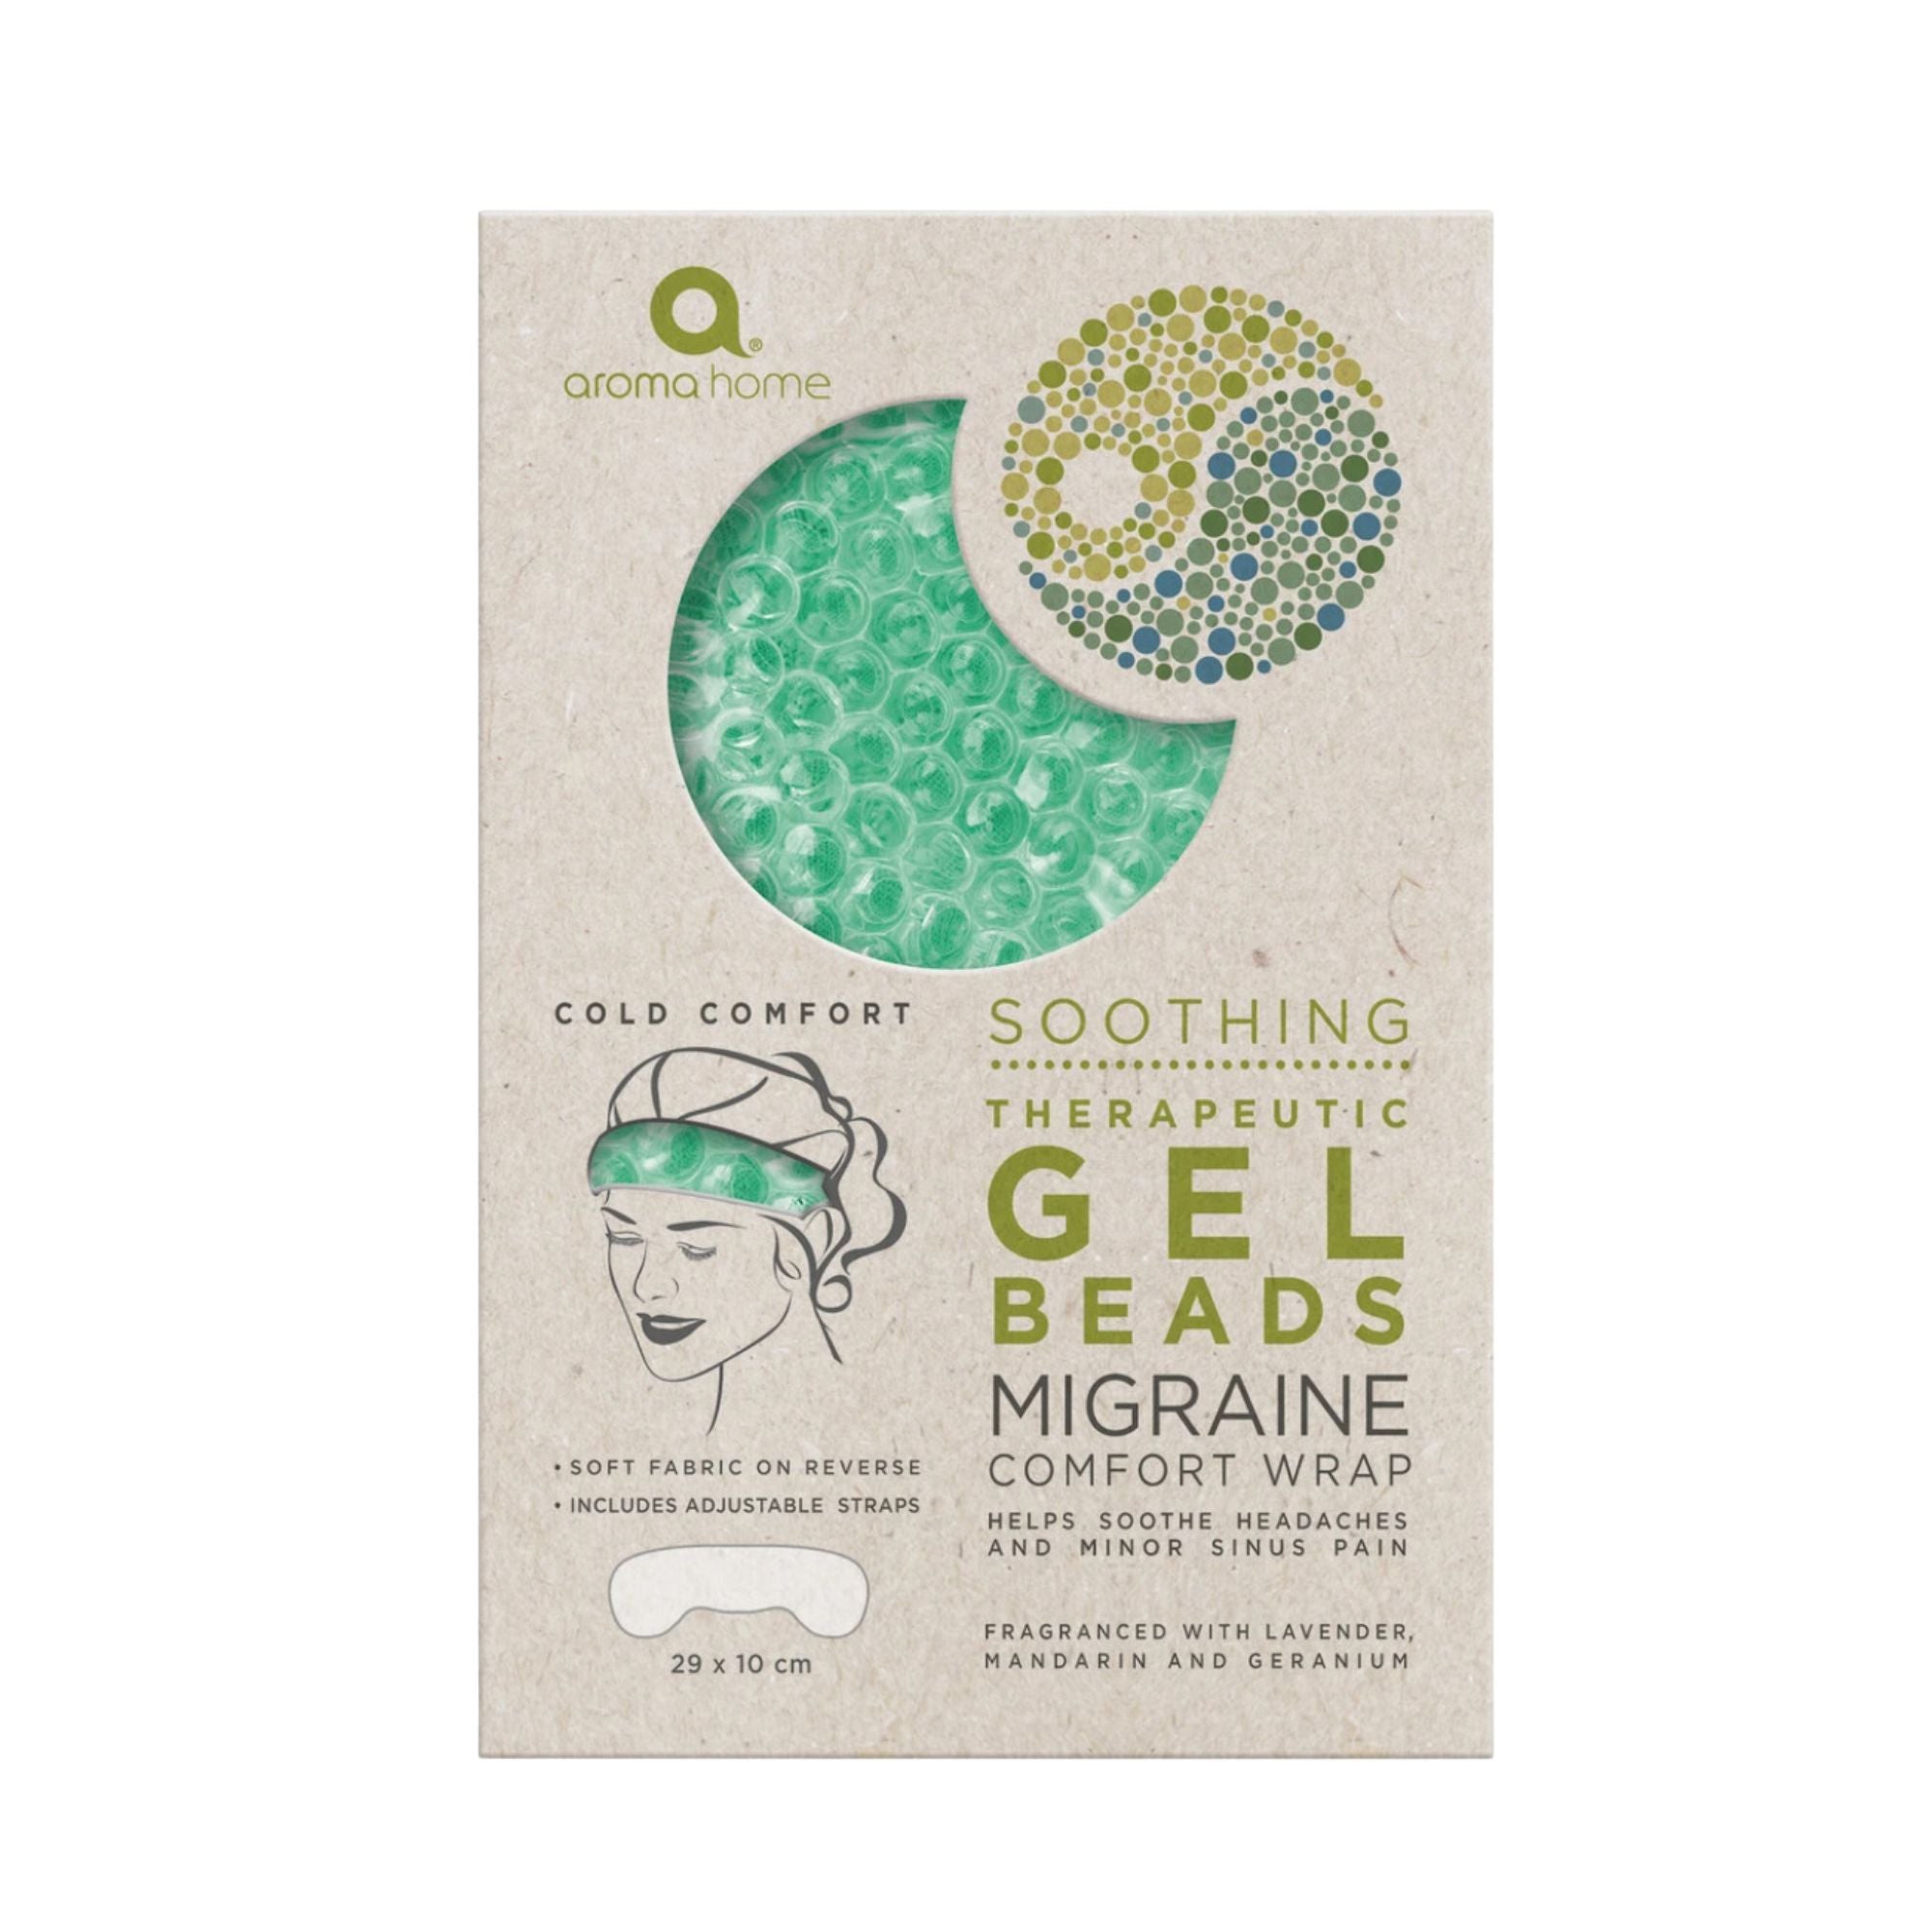 Sea Foam Therapeutic Gel Beads Migraine Relief Head Band Wrap In box